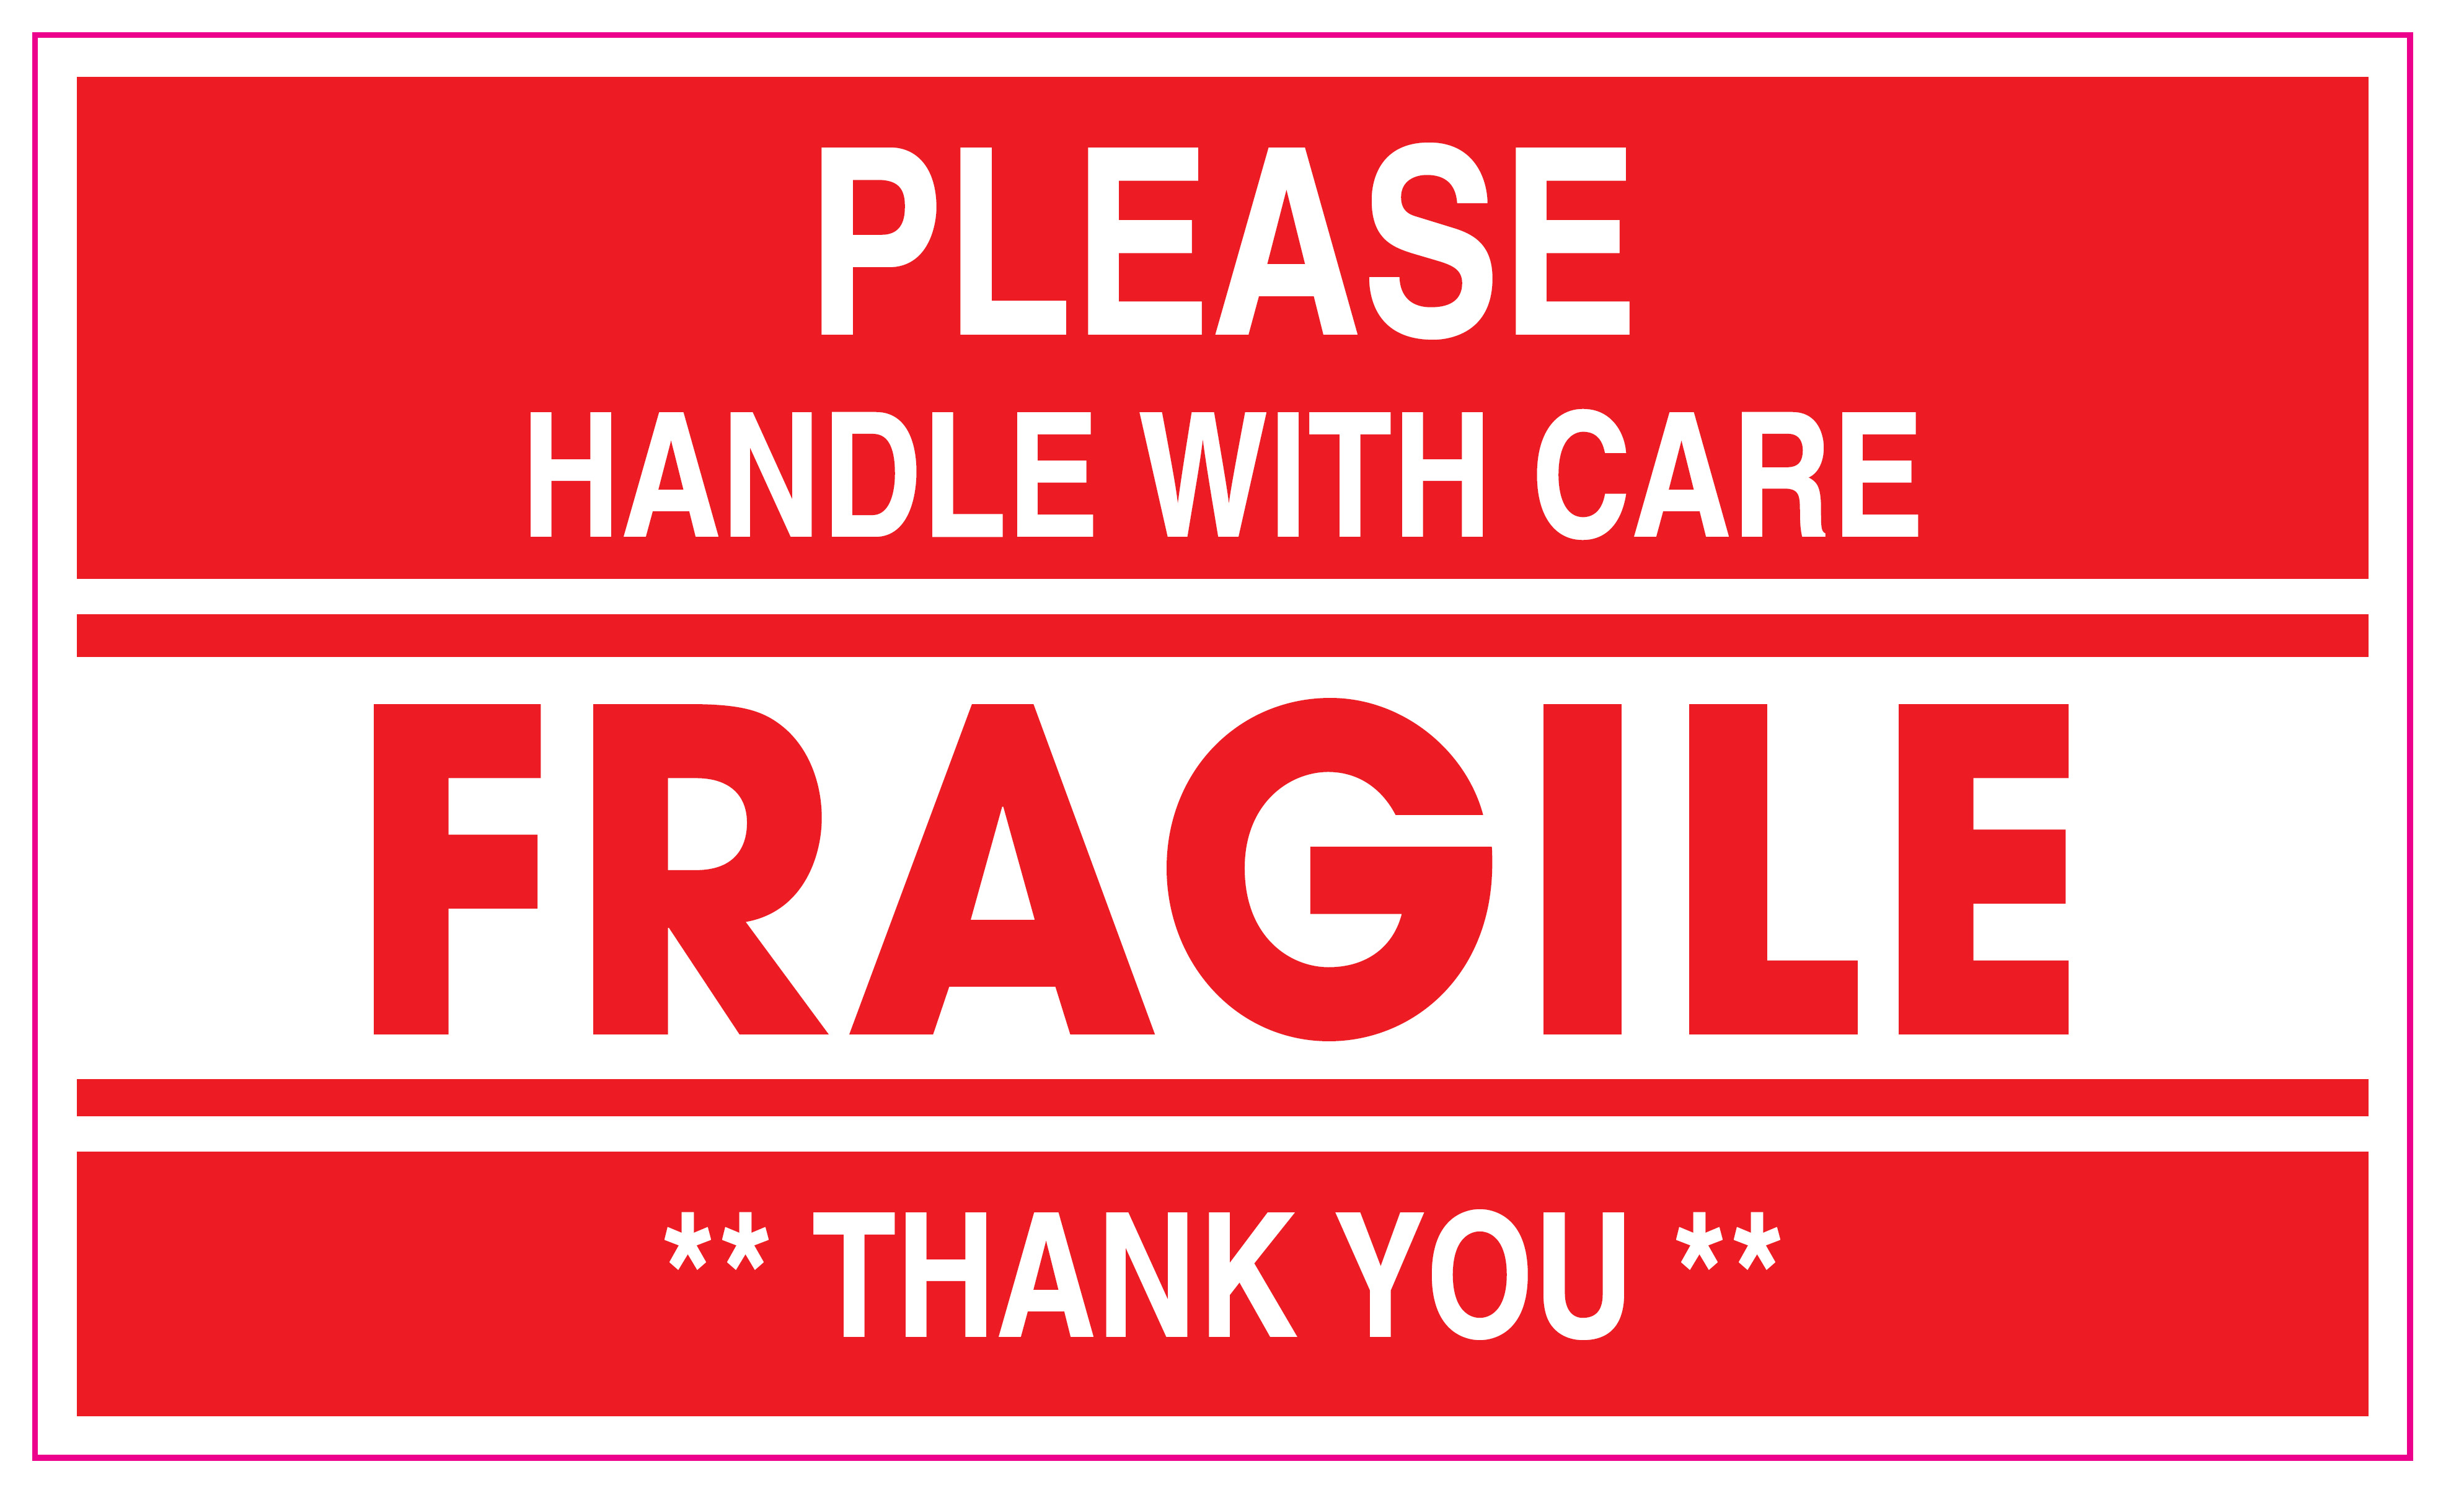 Fragile Label Free Fragile Printable Pdf